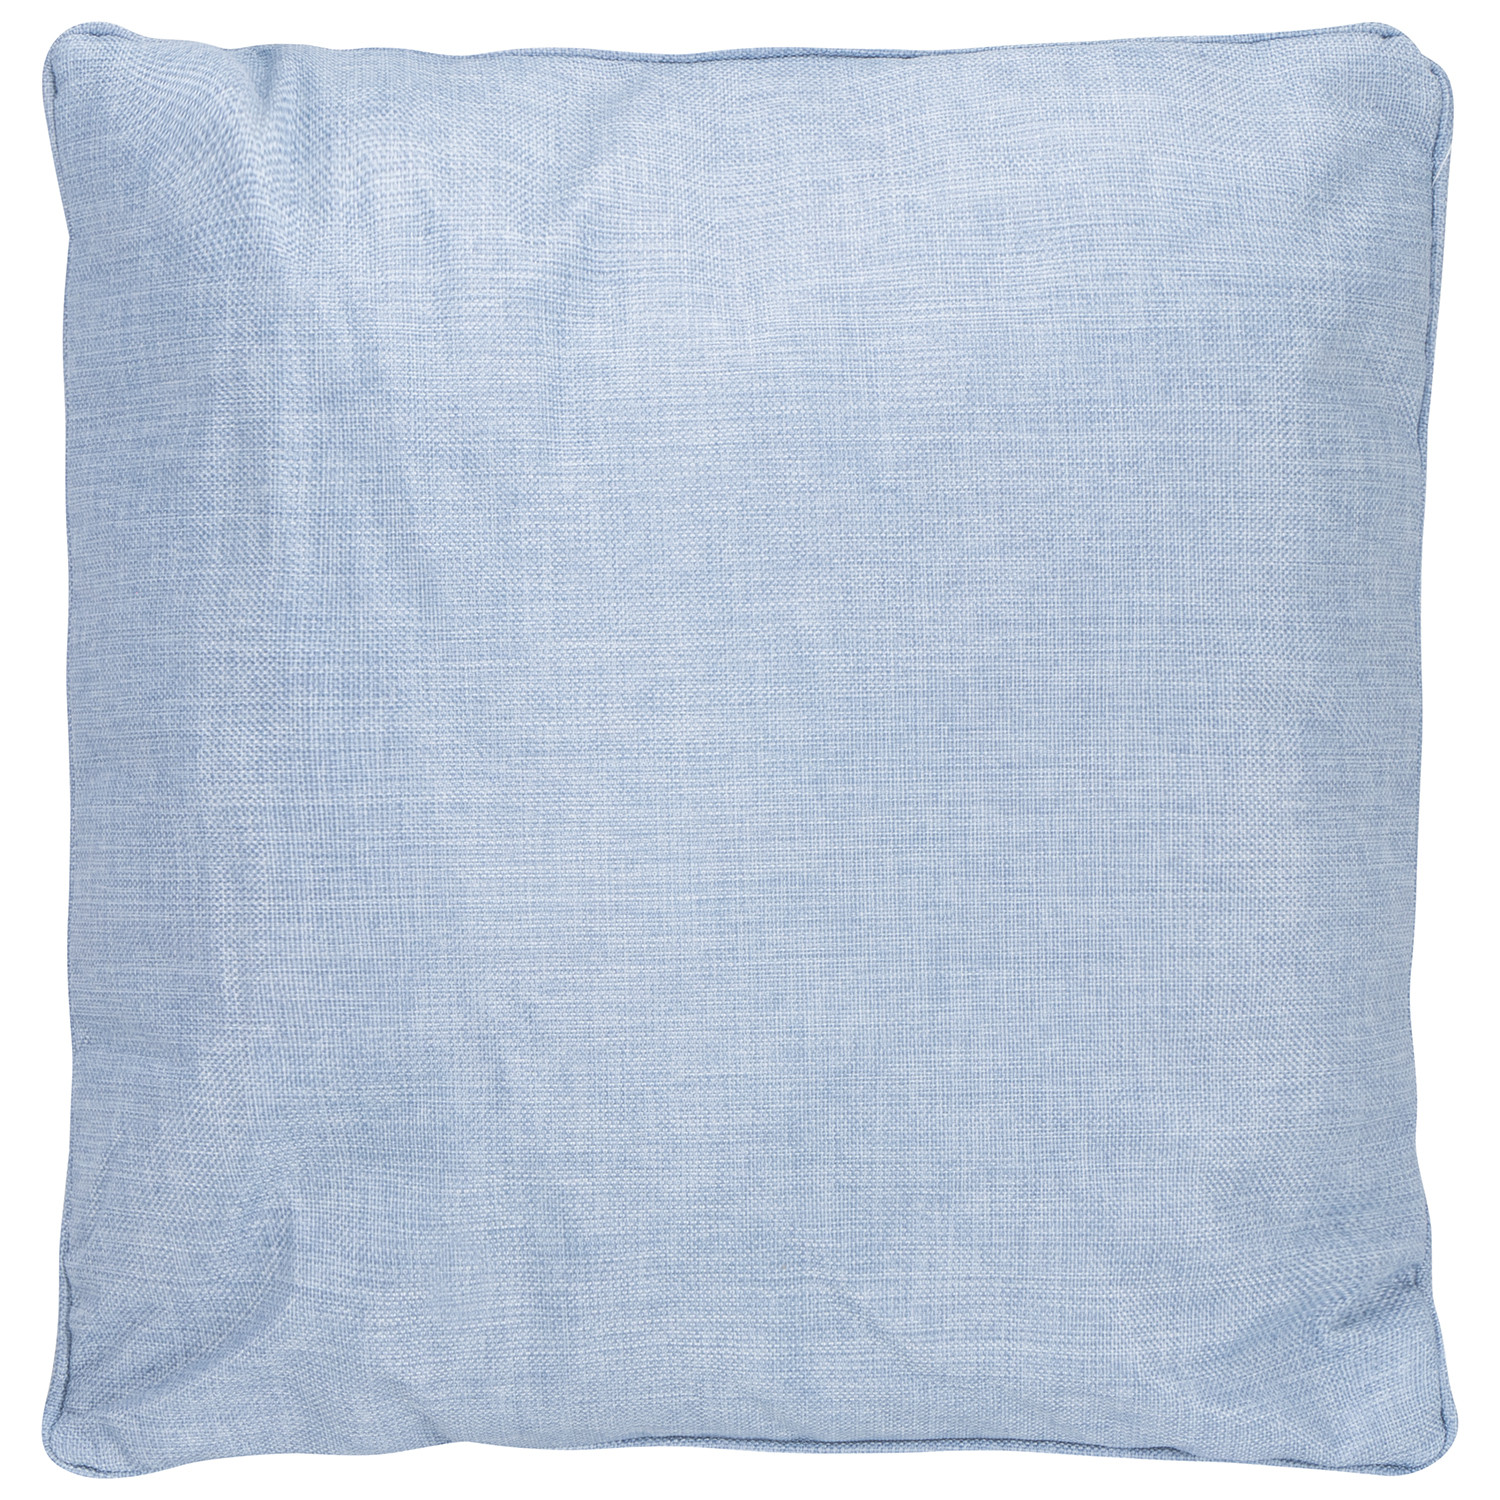 Divante Chatsworth Blue Piped Edge Cushion 45 x 45cm Image